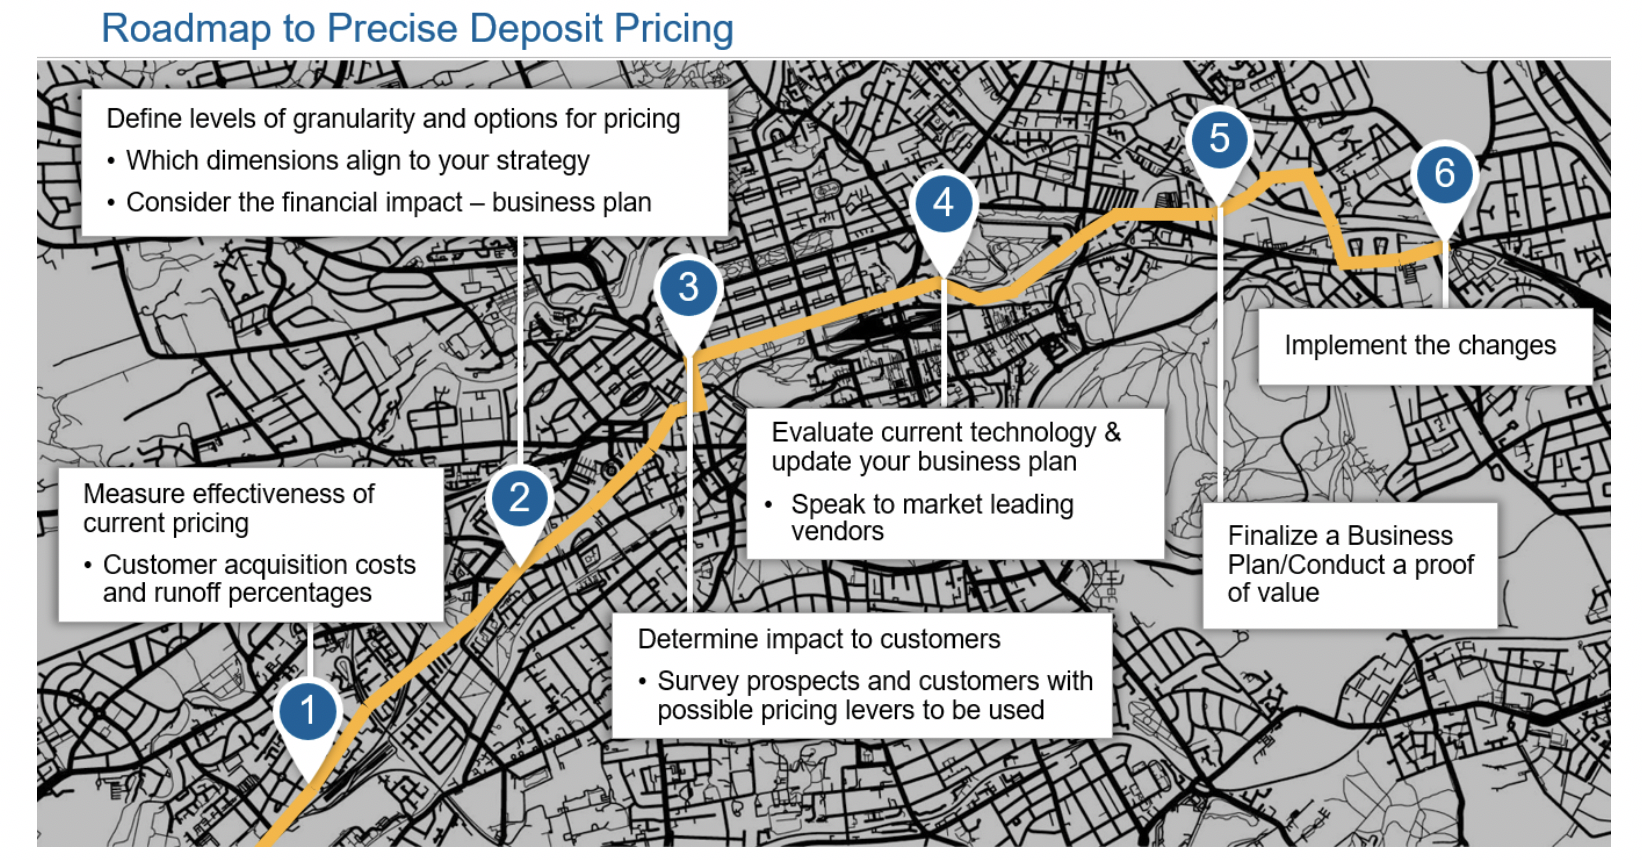 Roadmap to Precise Deposit Pricing